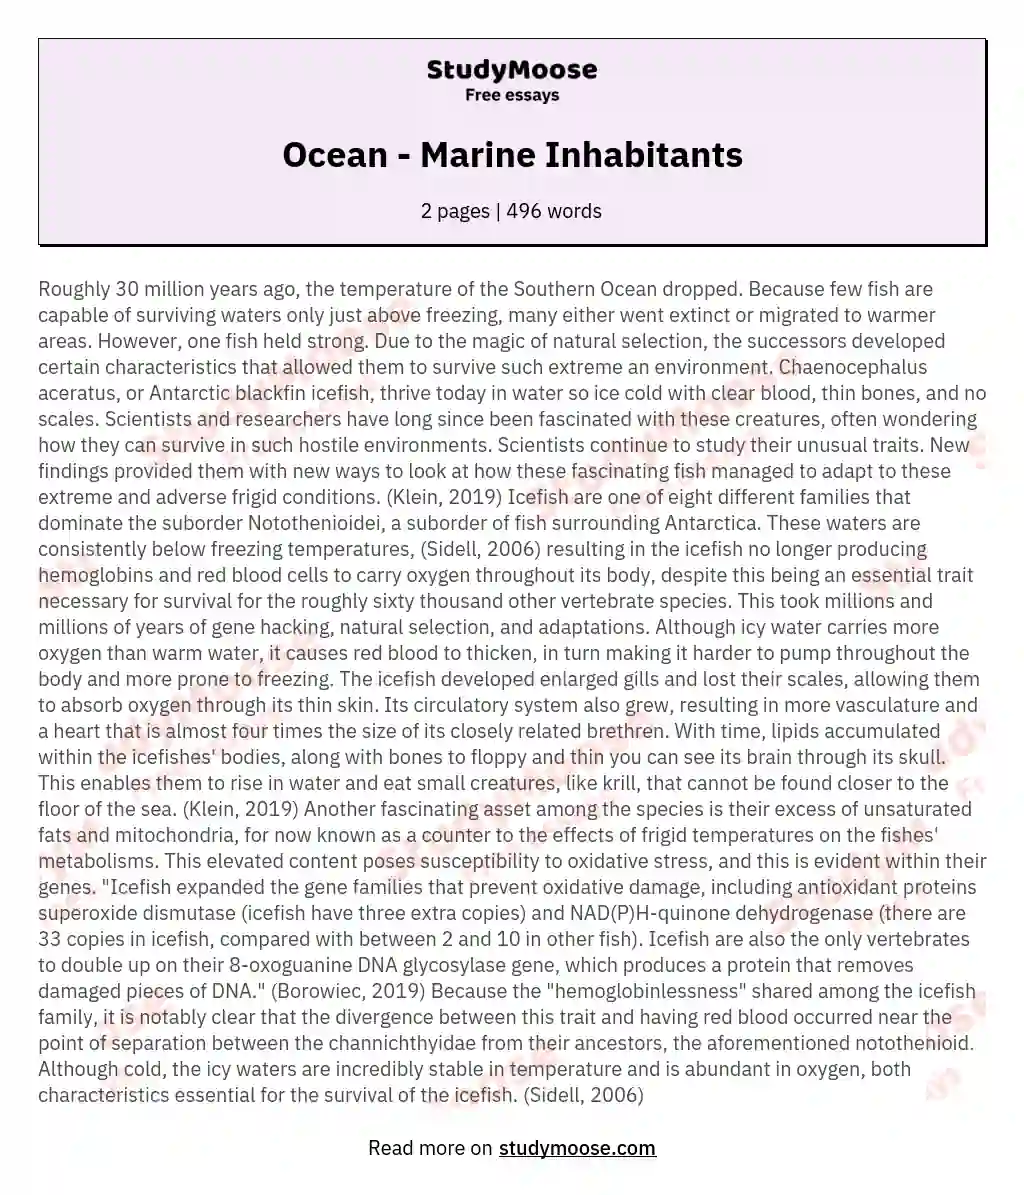 Ocean - Marine Inhabitants essay